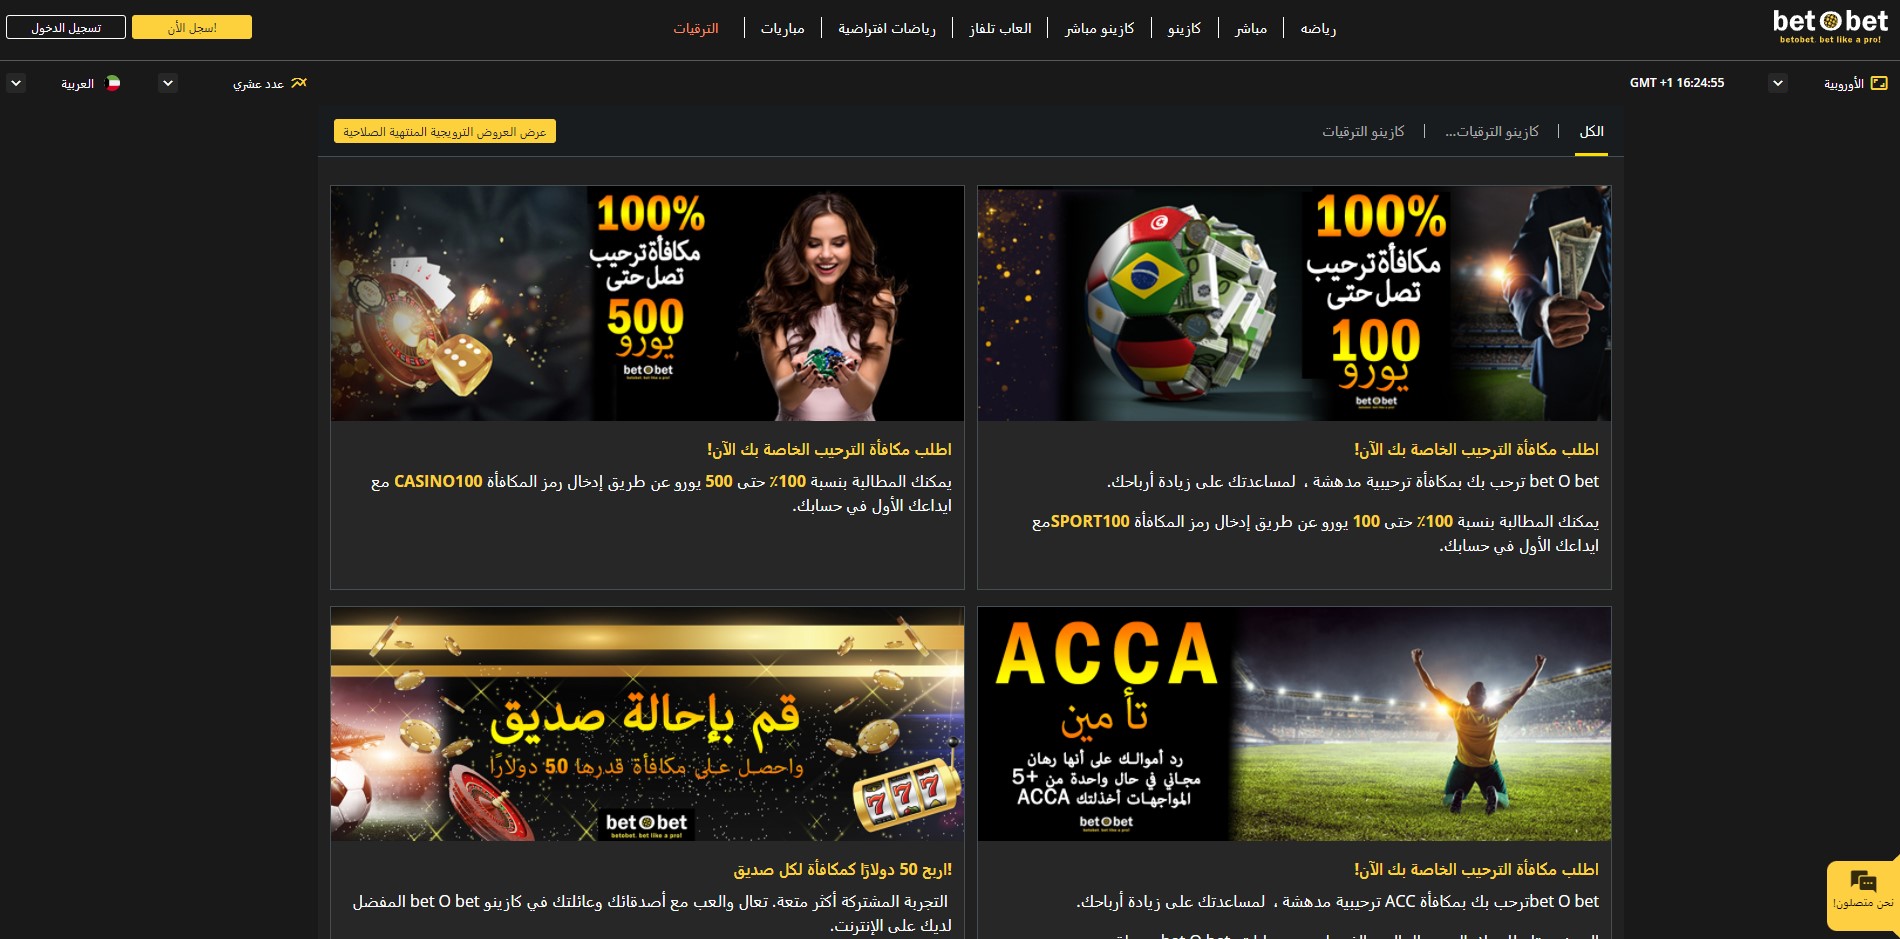 betObet - موقع مراهنات السنوكر صاعد بقوة في الدول العربية